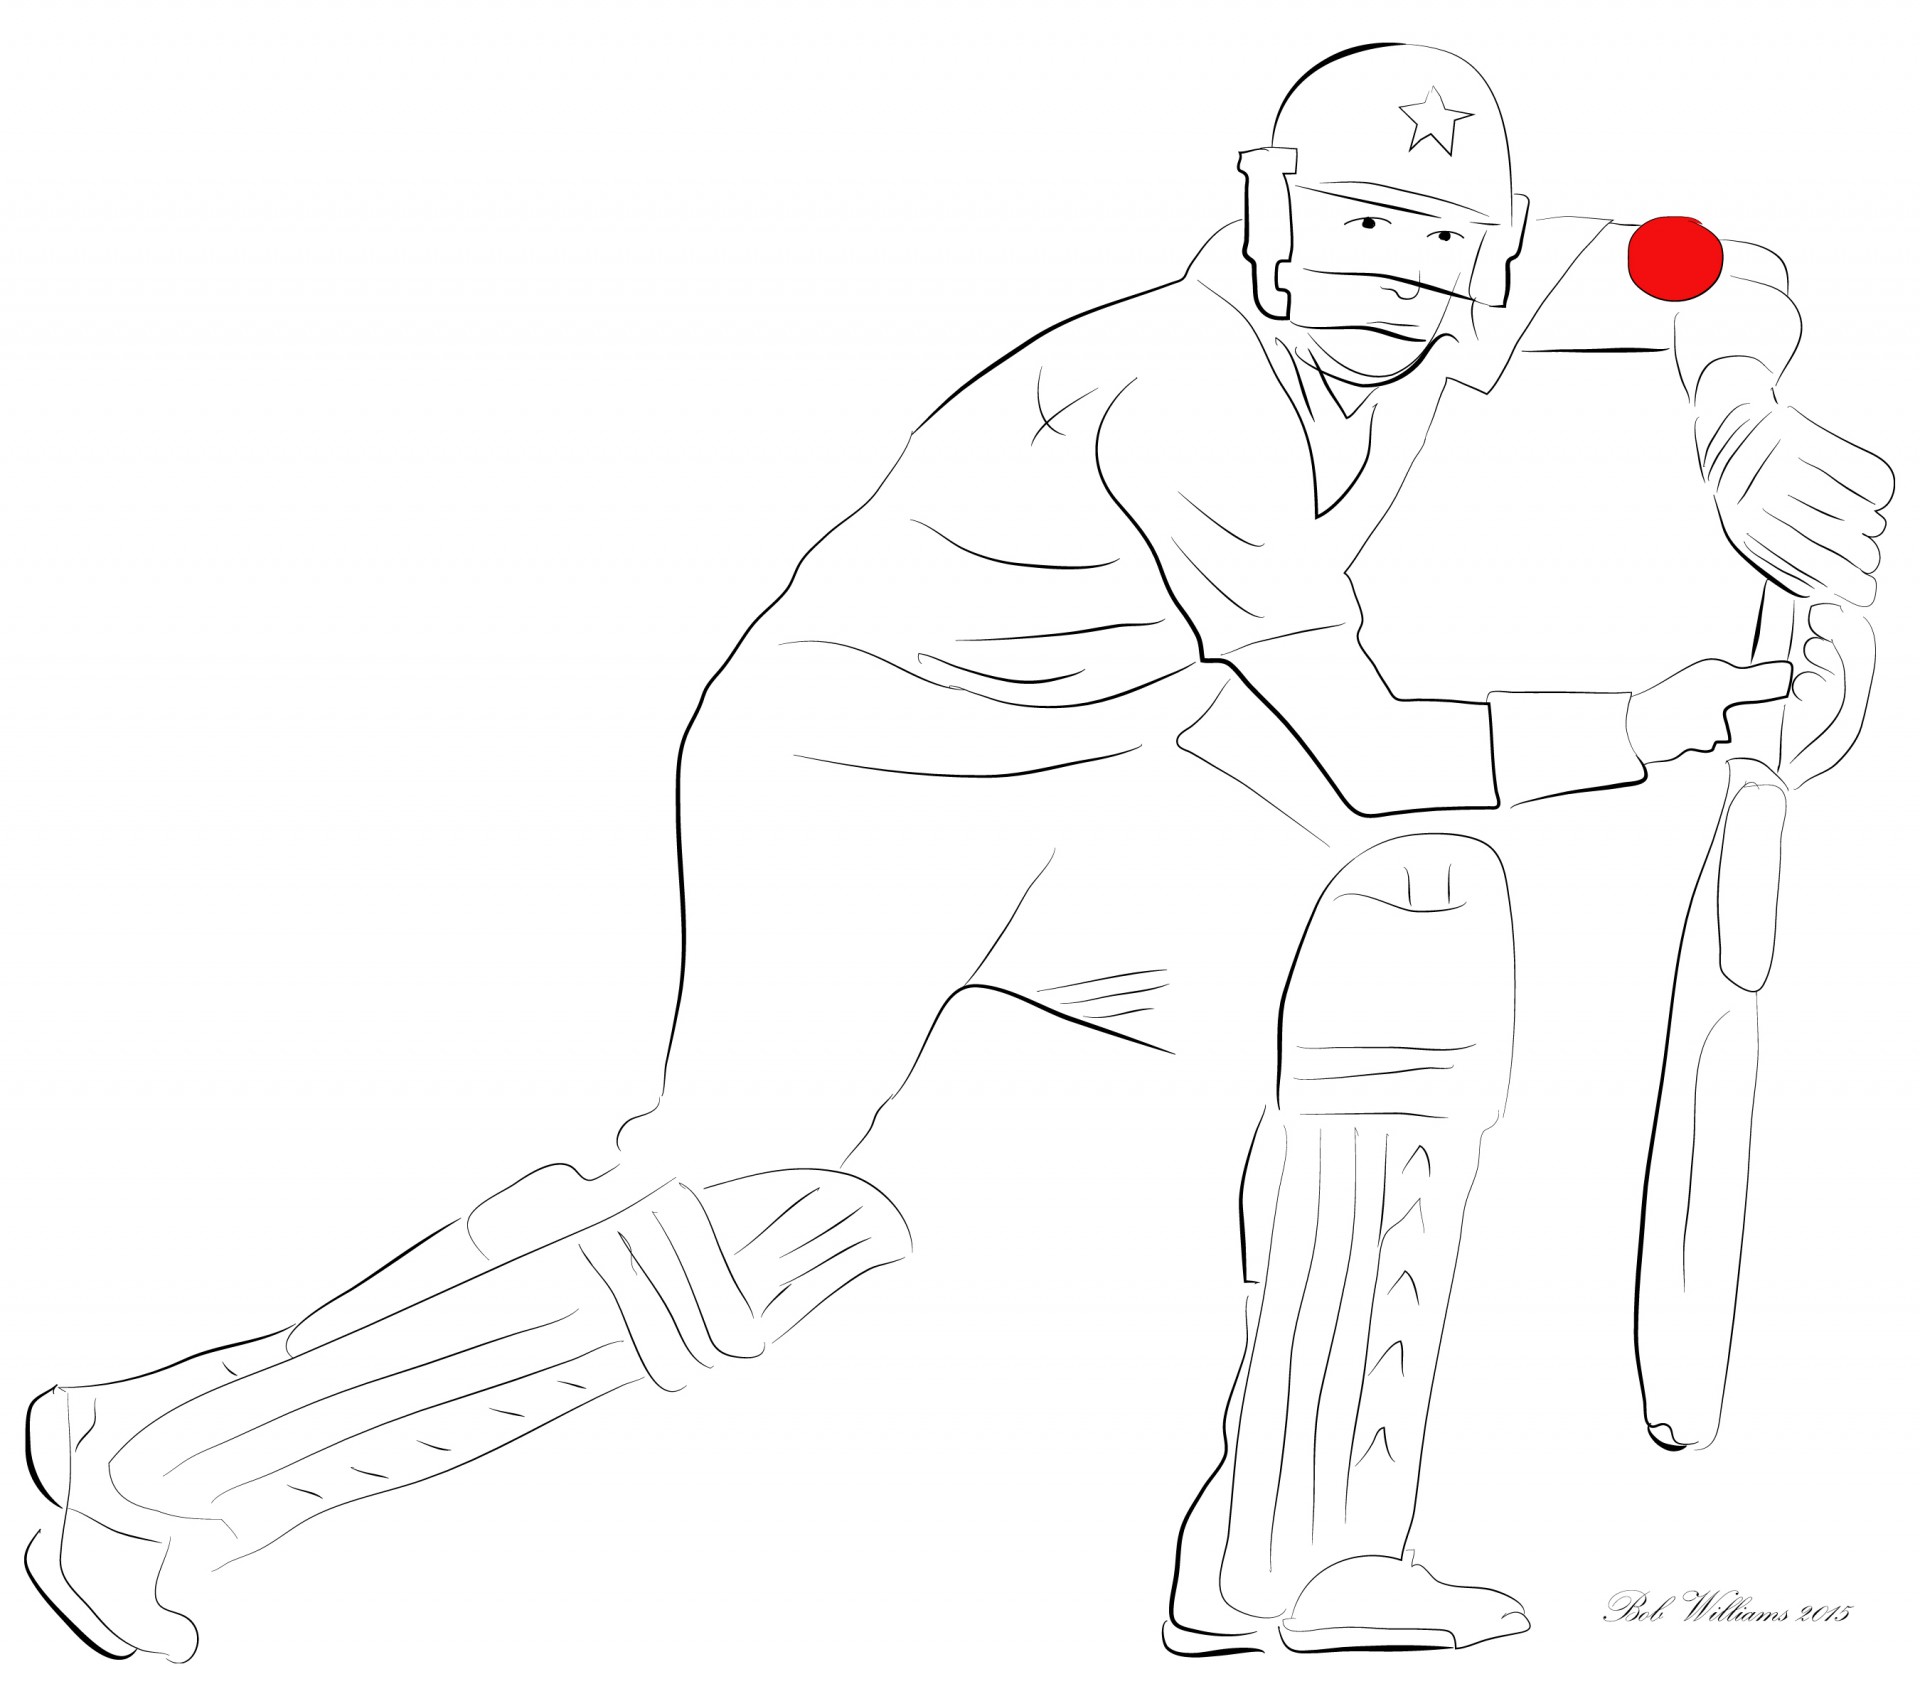 Cricket Player Batsman drawing  YouTube